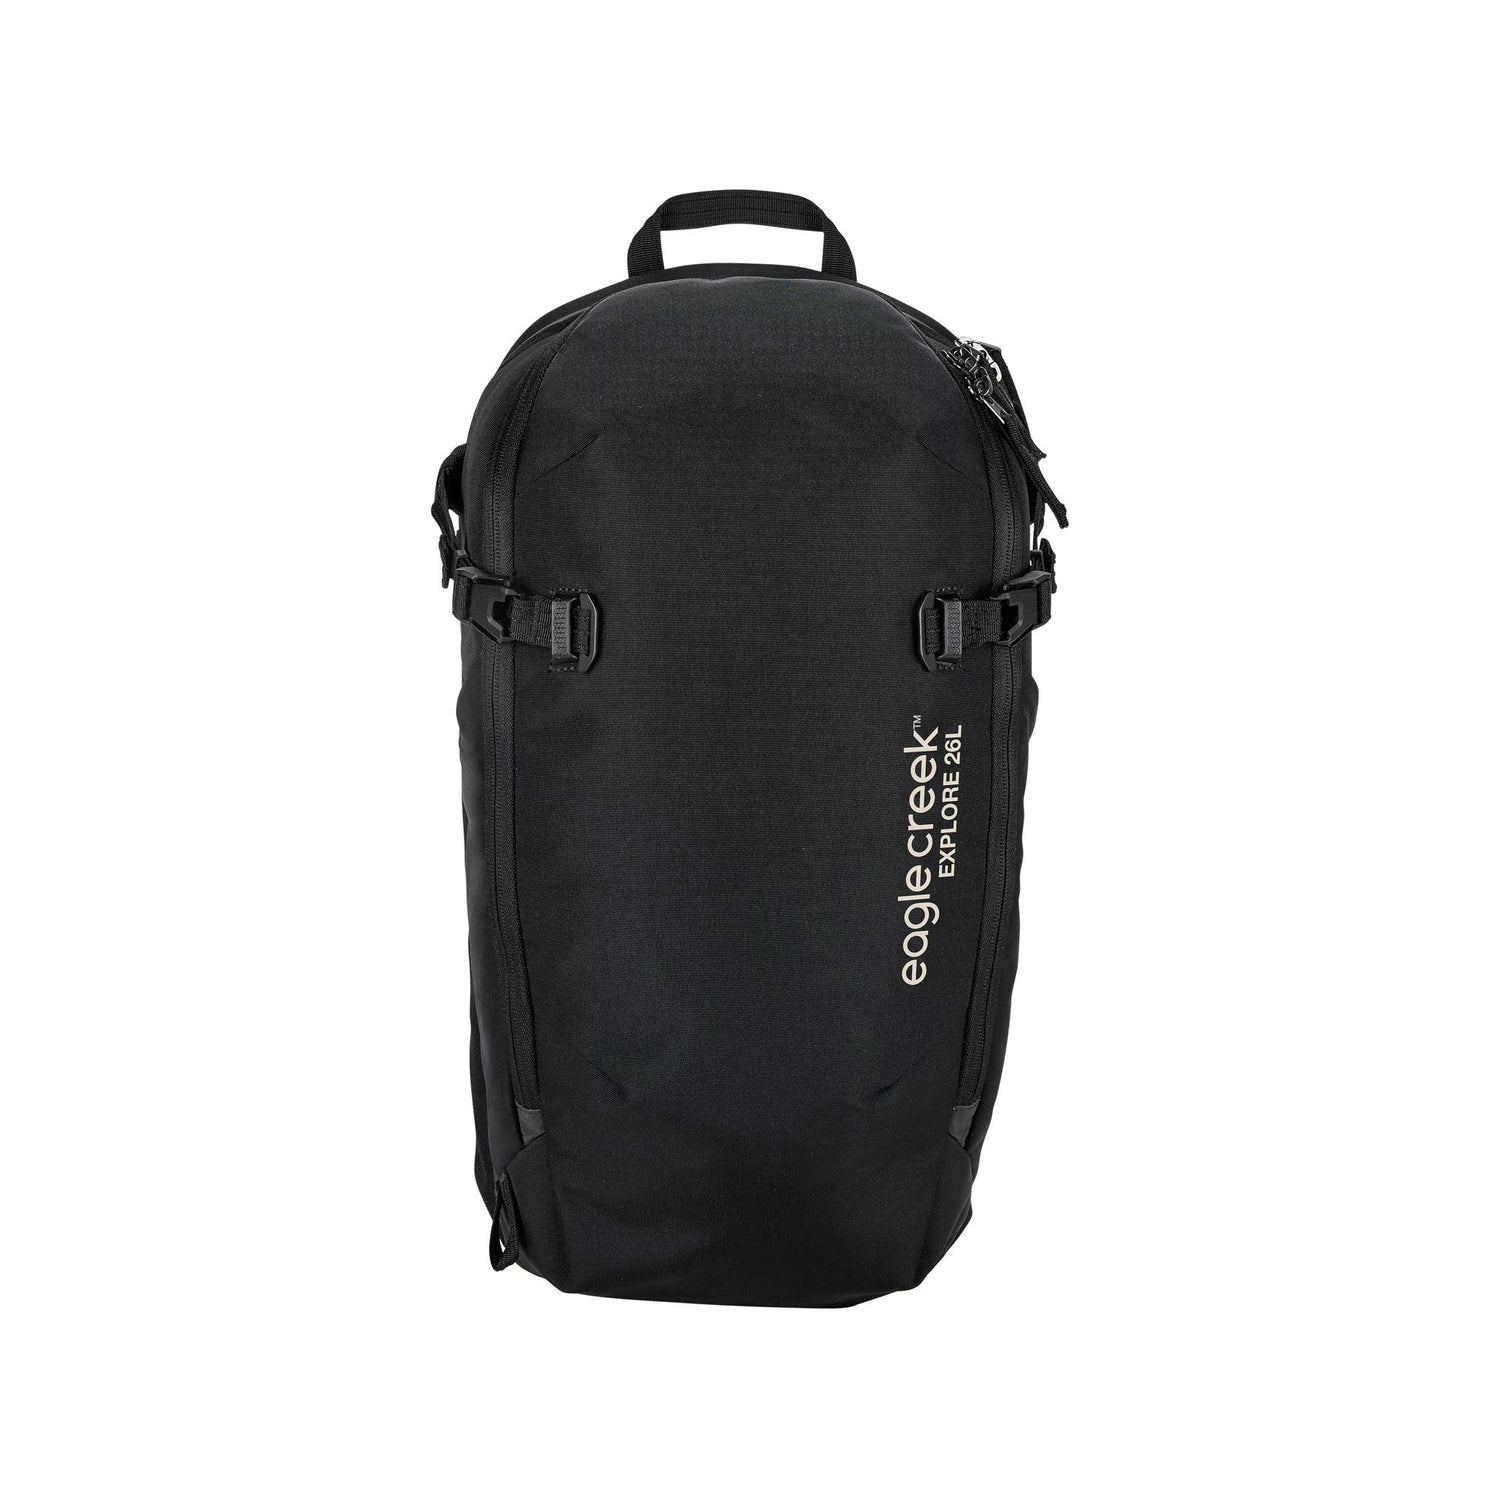 Eagle Creek Travel Gear backpack Double Bag Black